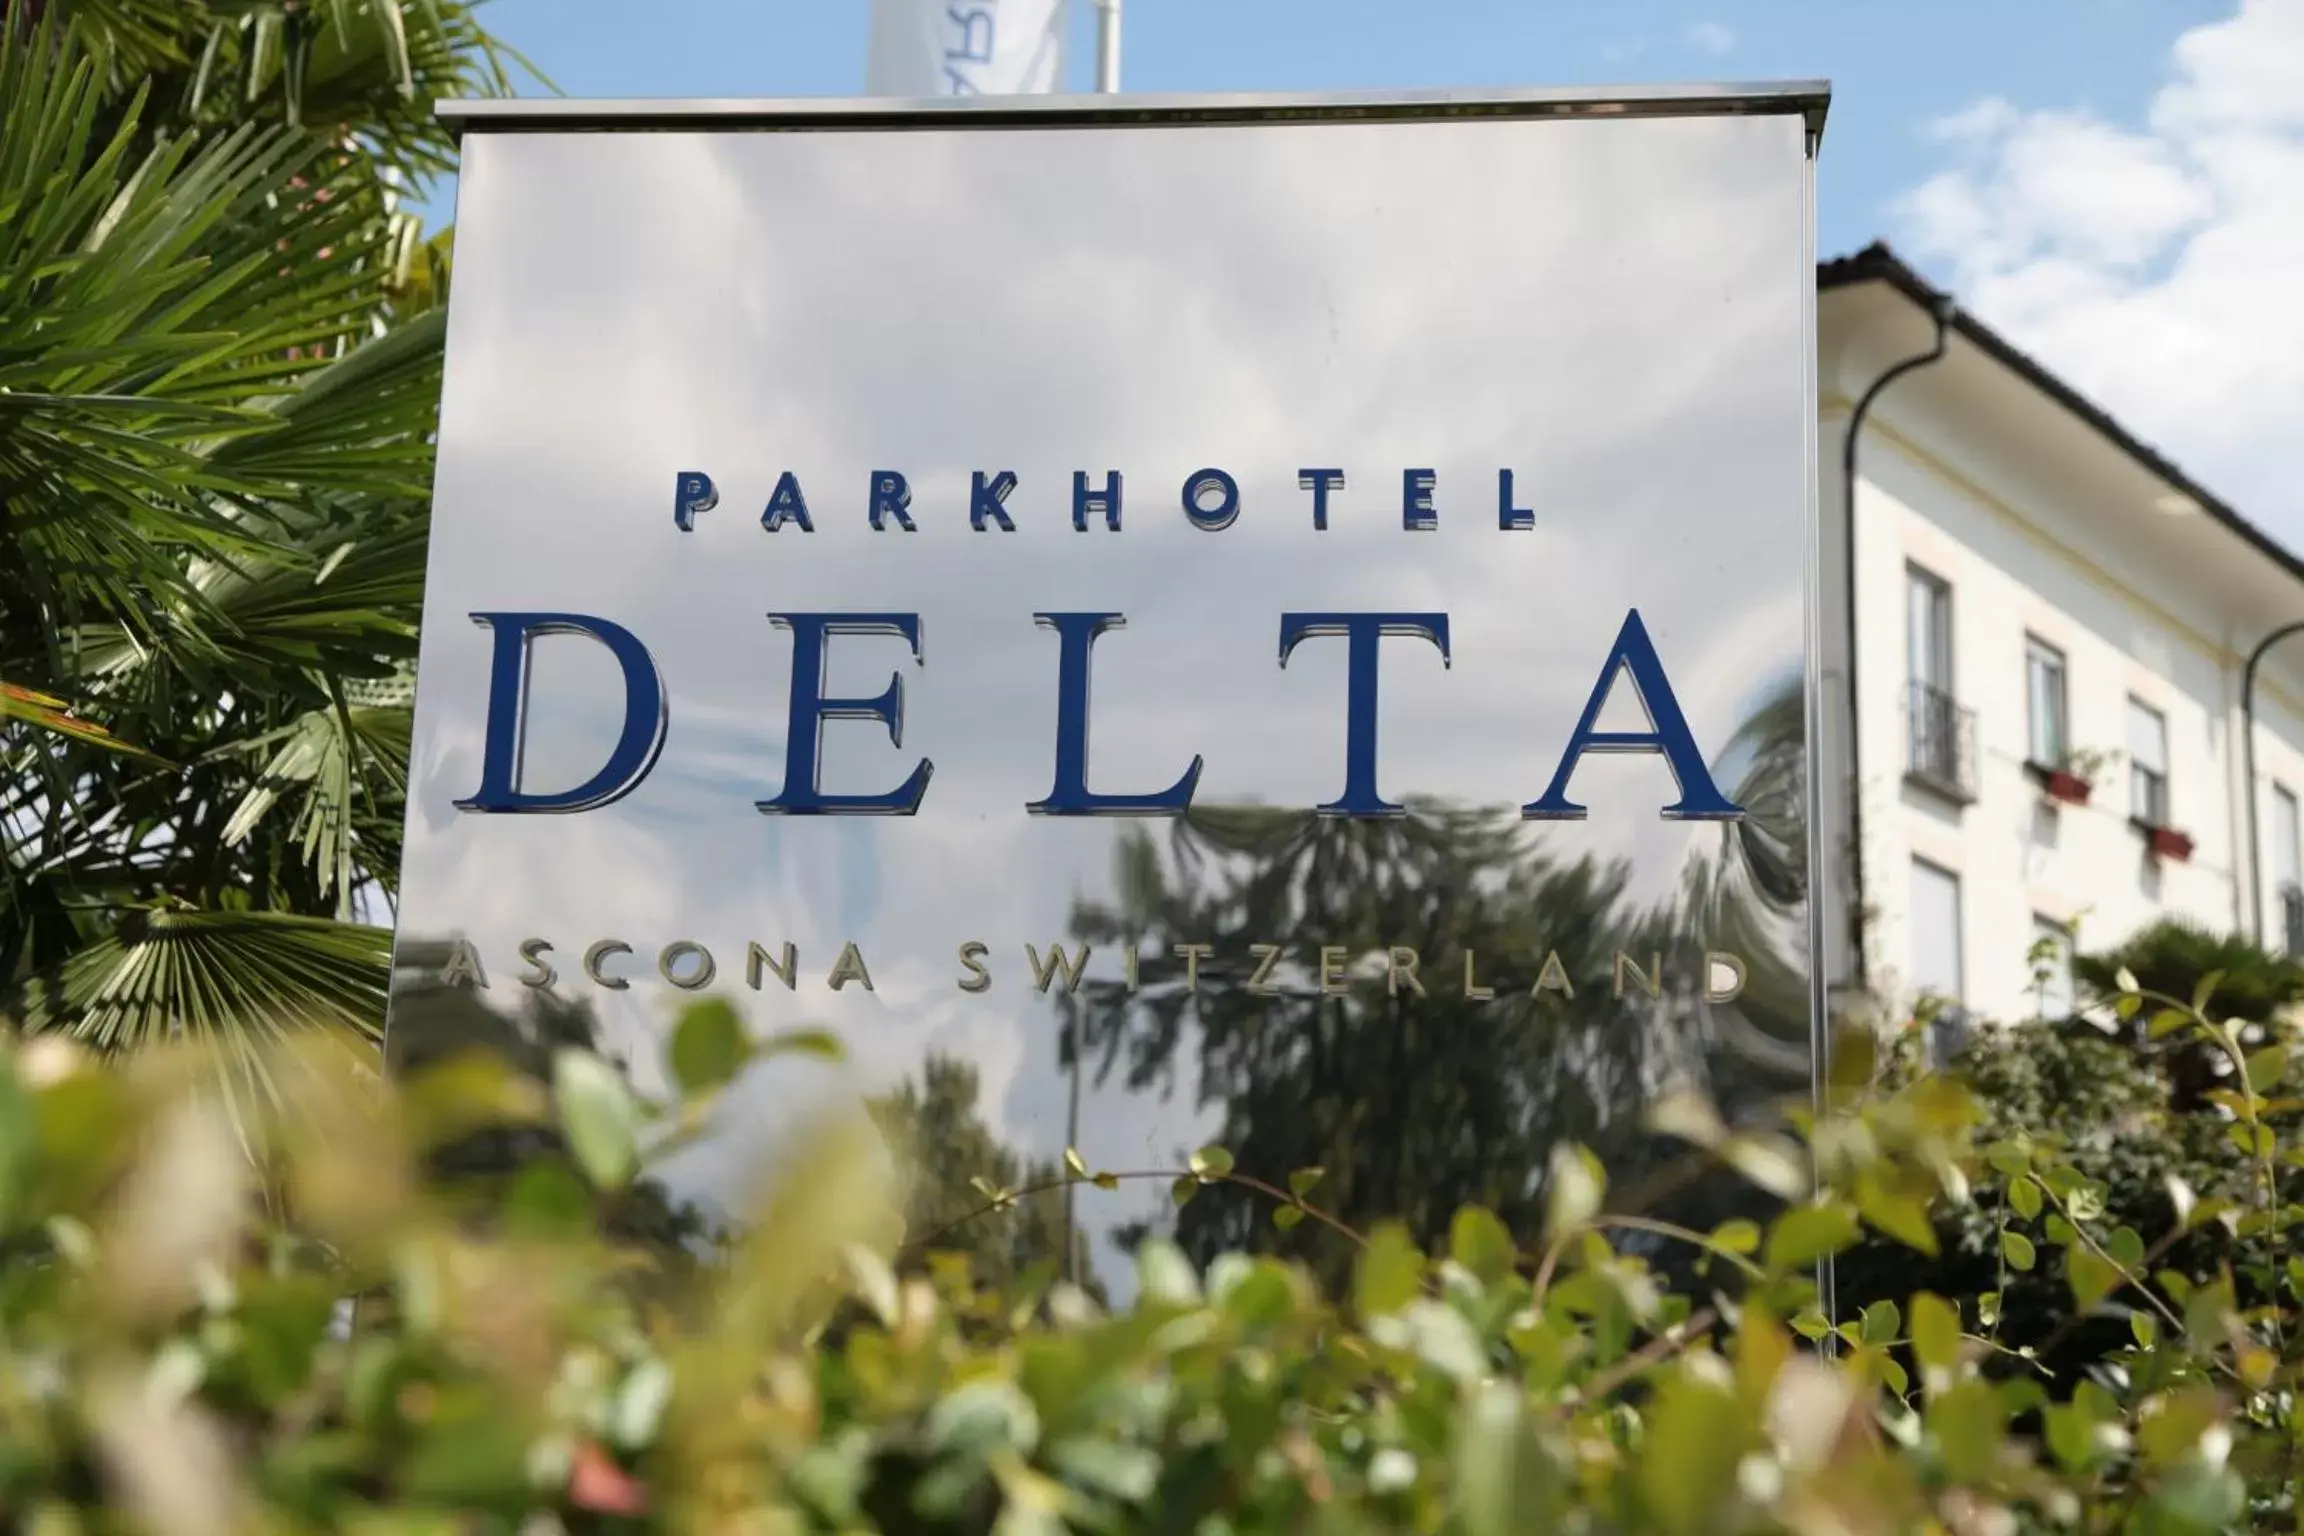 Facade/entrance in Parkhotel Delta, Wellbeing Resort